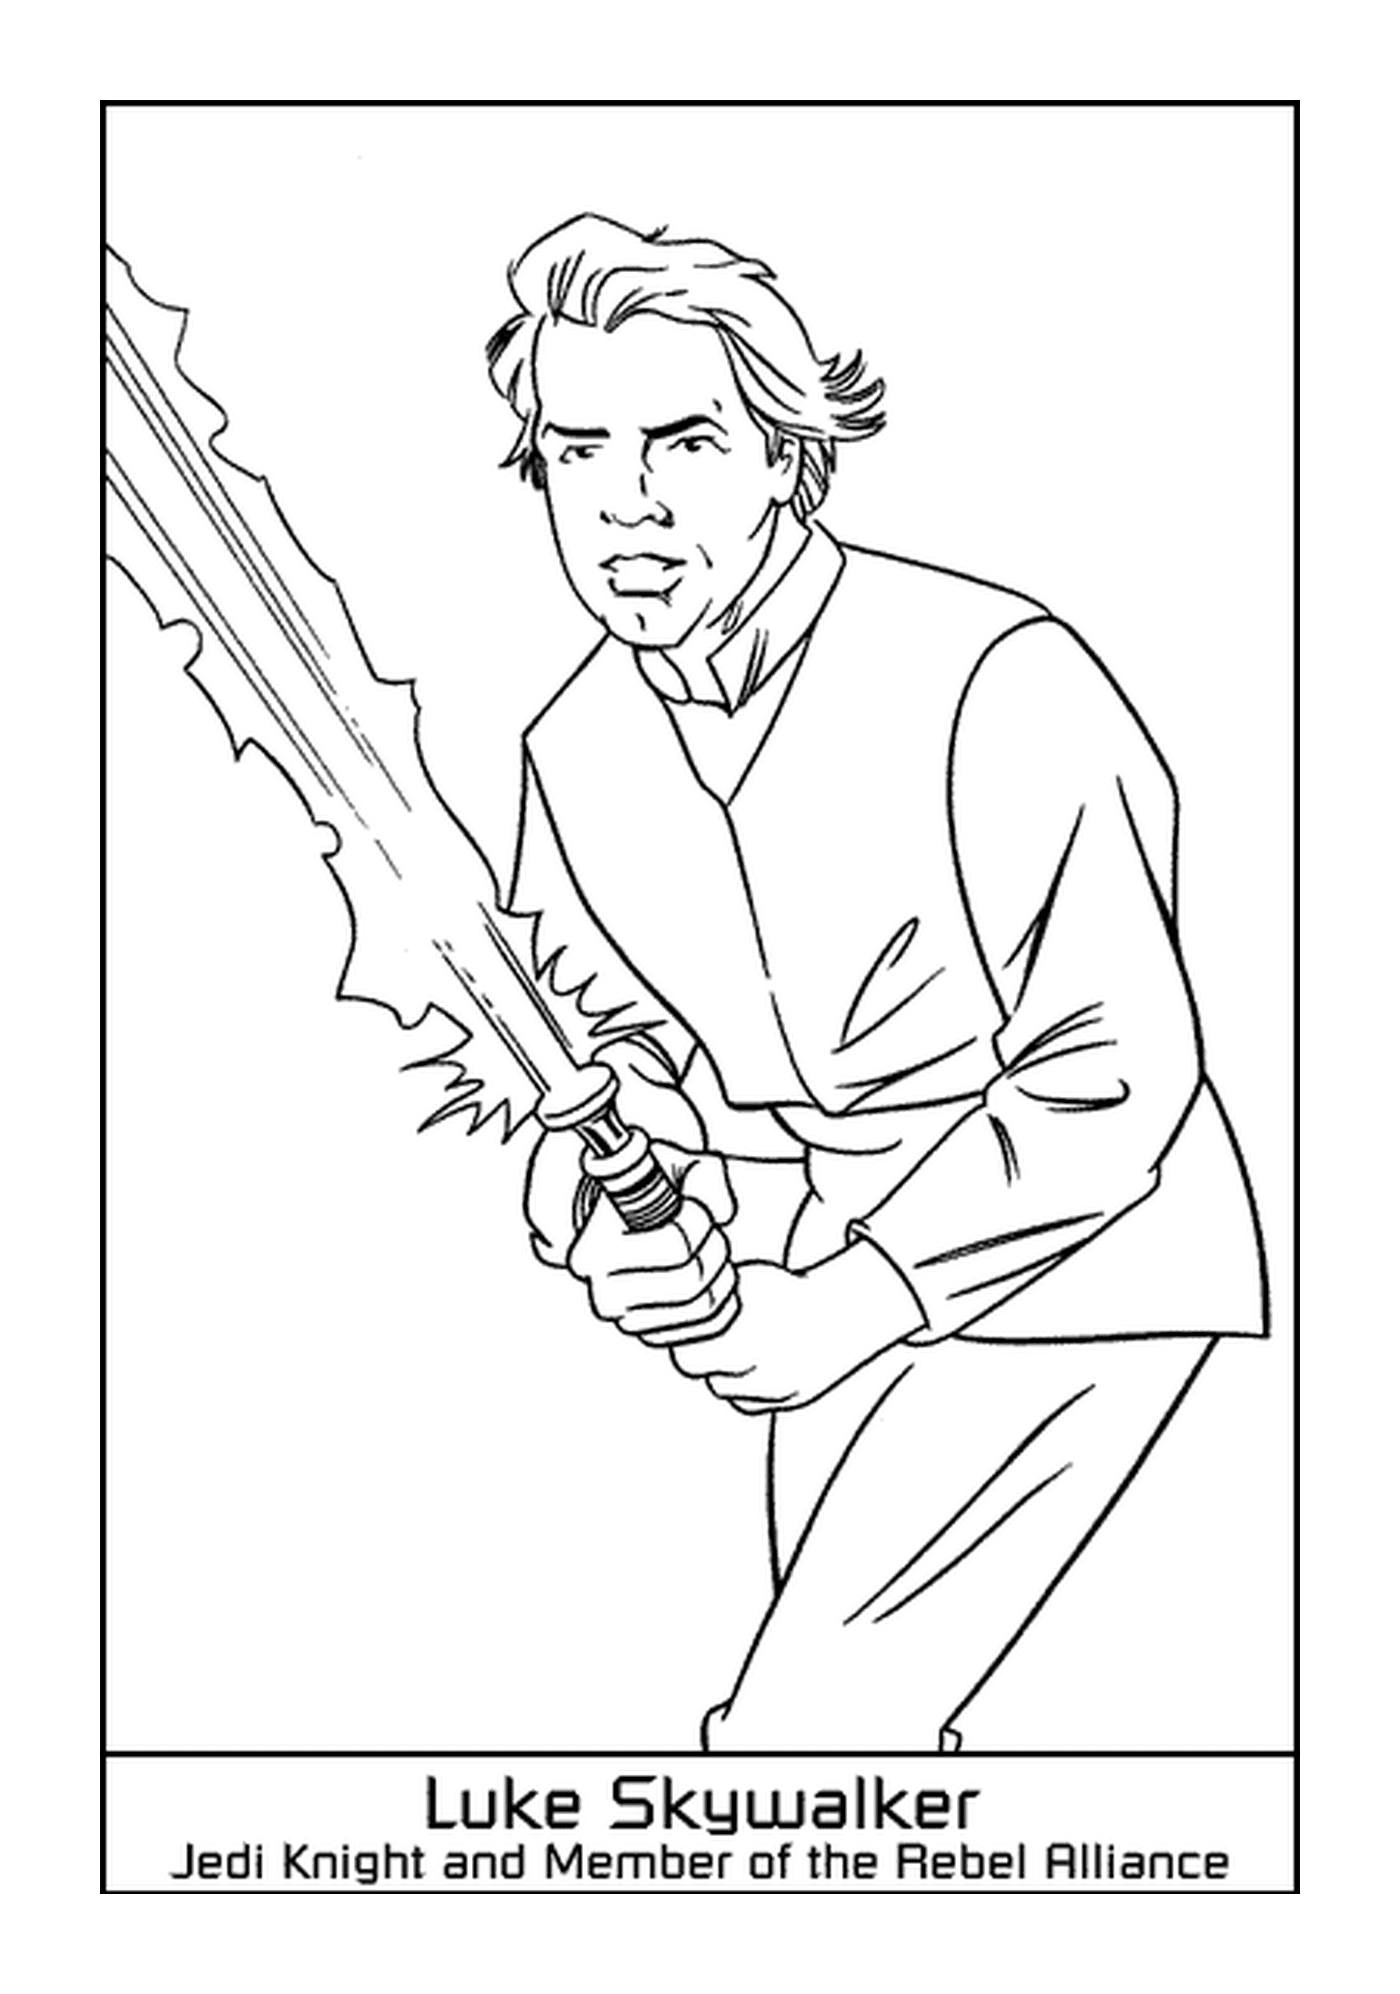   Luke Skywalker, le héros 